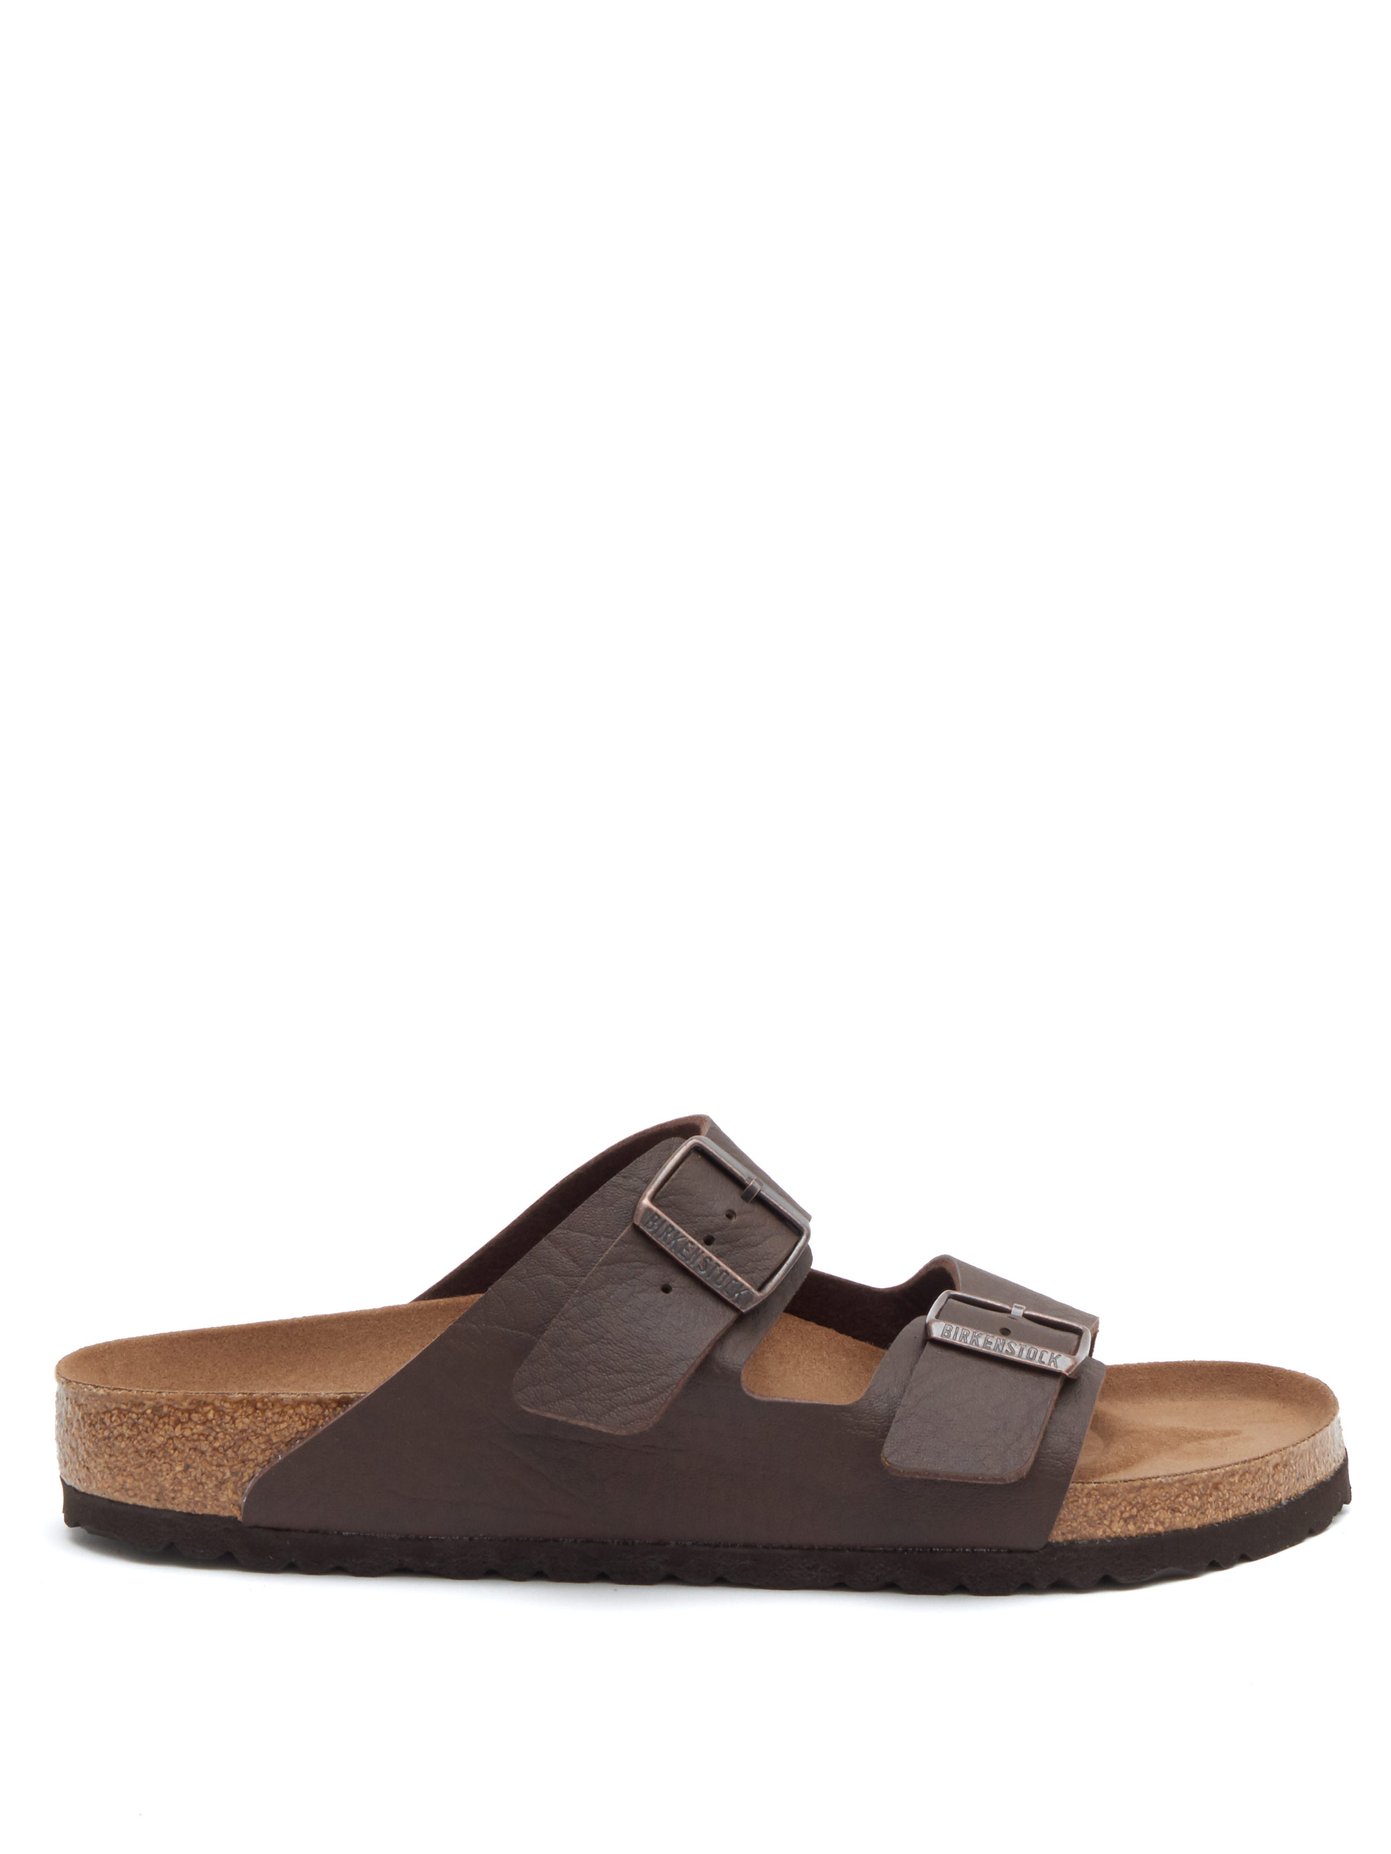 birkenstock arizona two strap sandals brown